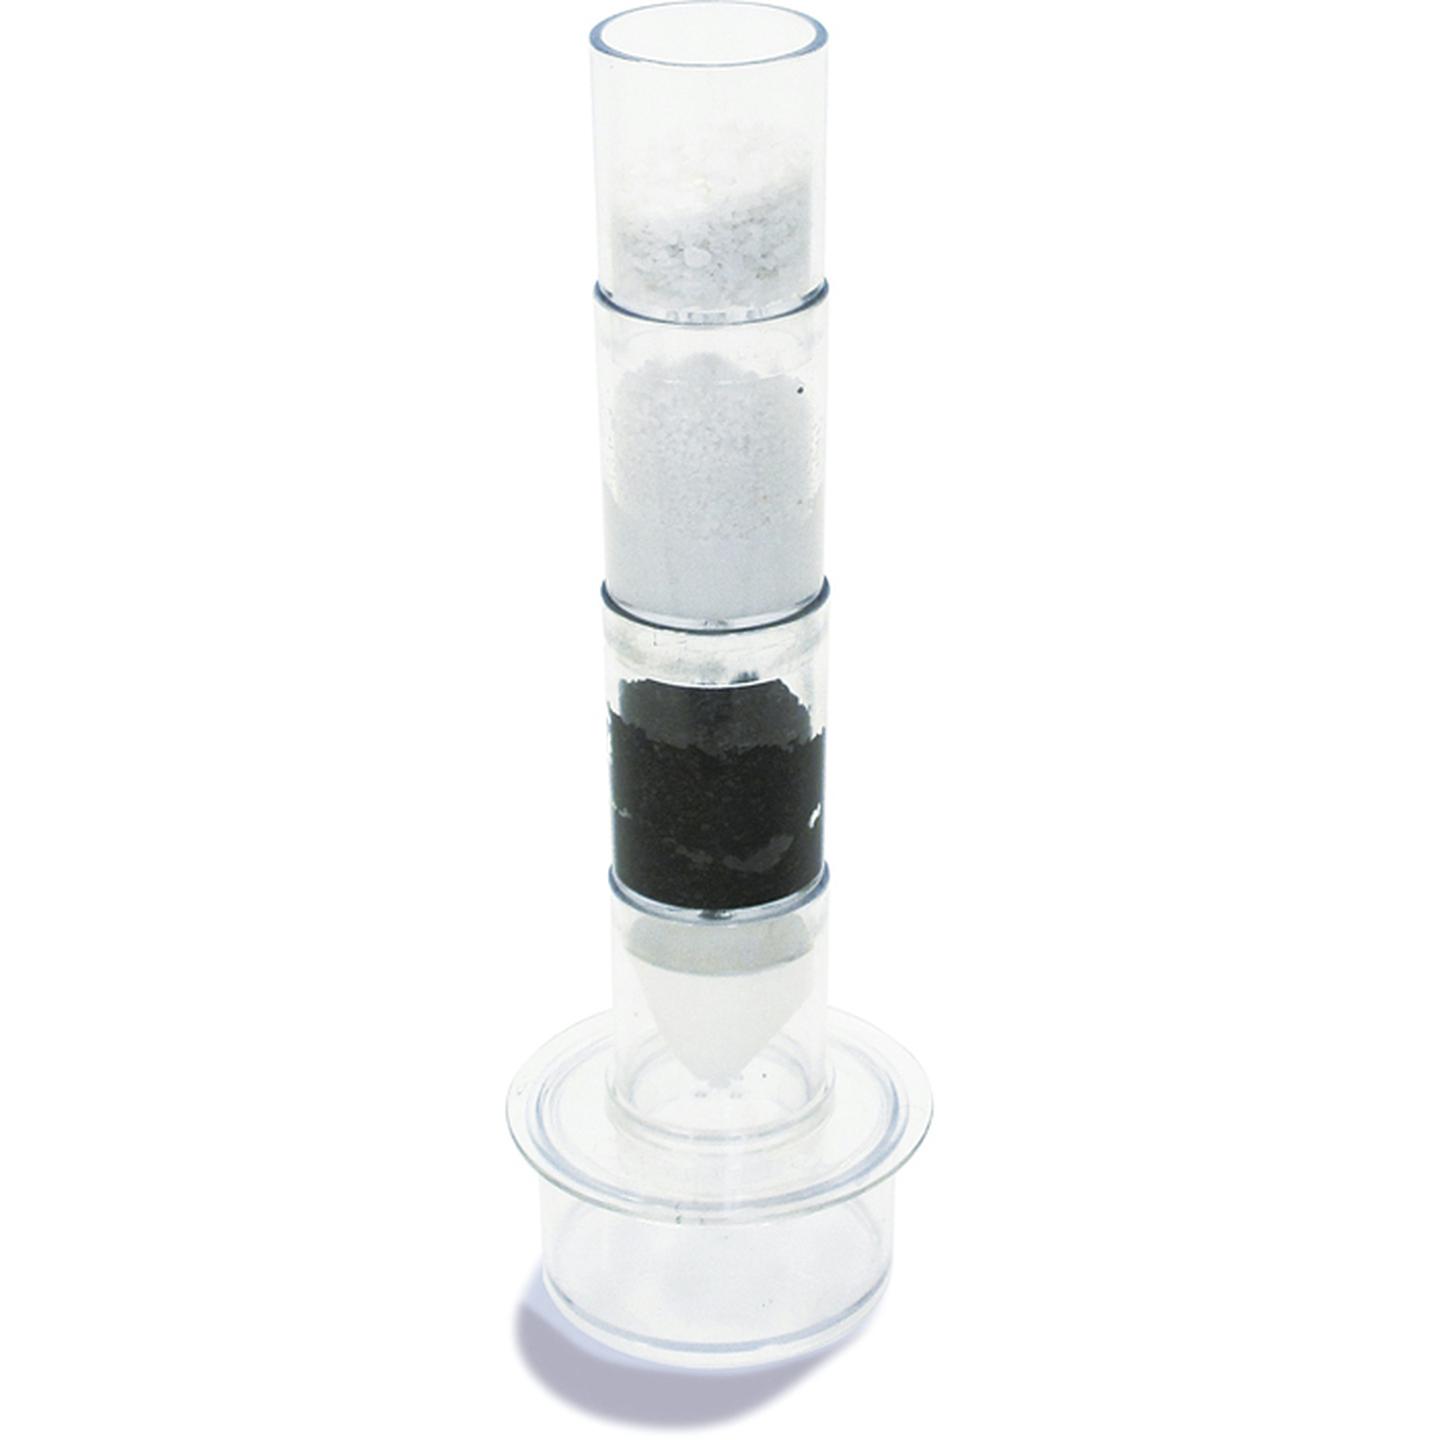 Water Purification Mini Science Kit